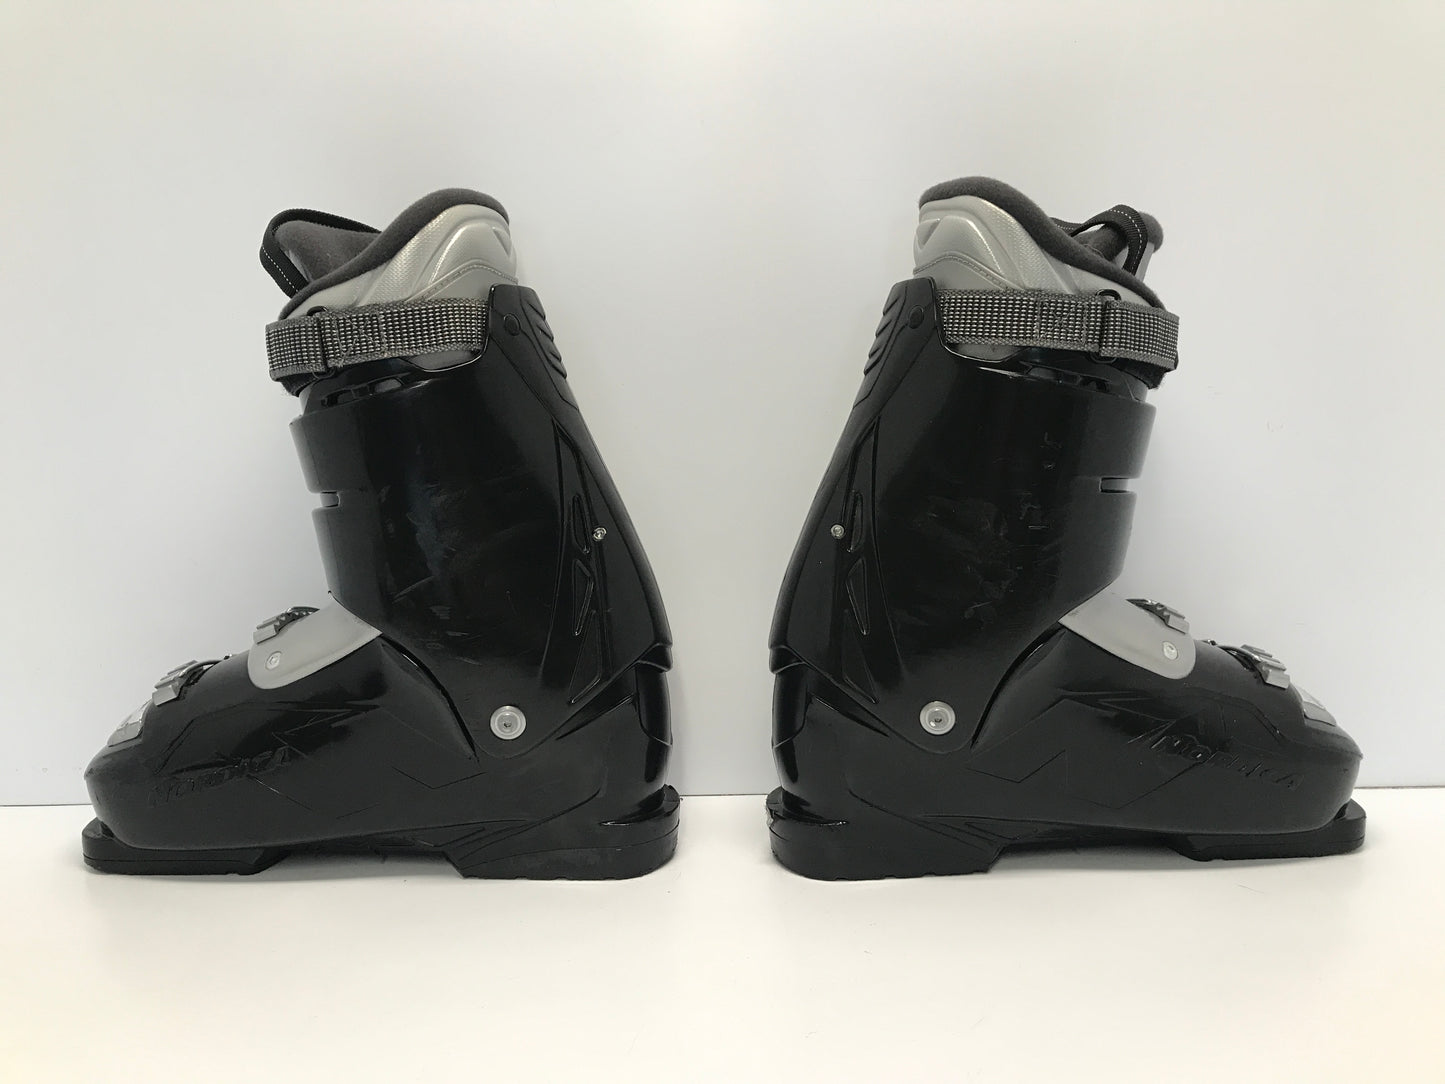 Ski Boots Mondo Size 27.5 Men's Size 7.5 Ladies 7 Size 8.5 315 mm Nordica Black Grey Red Like New